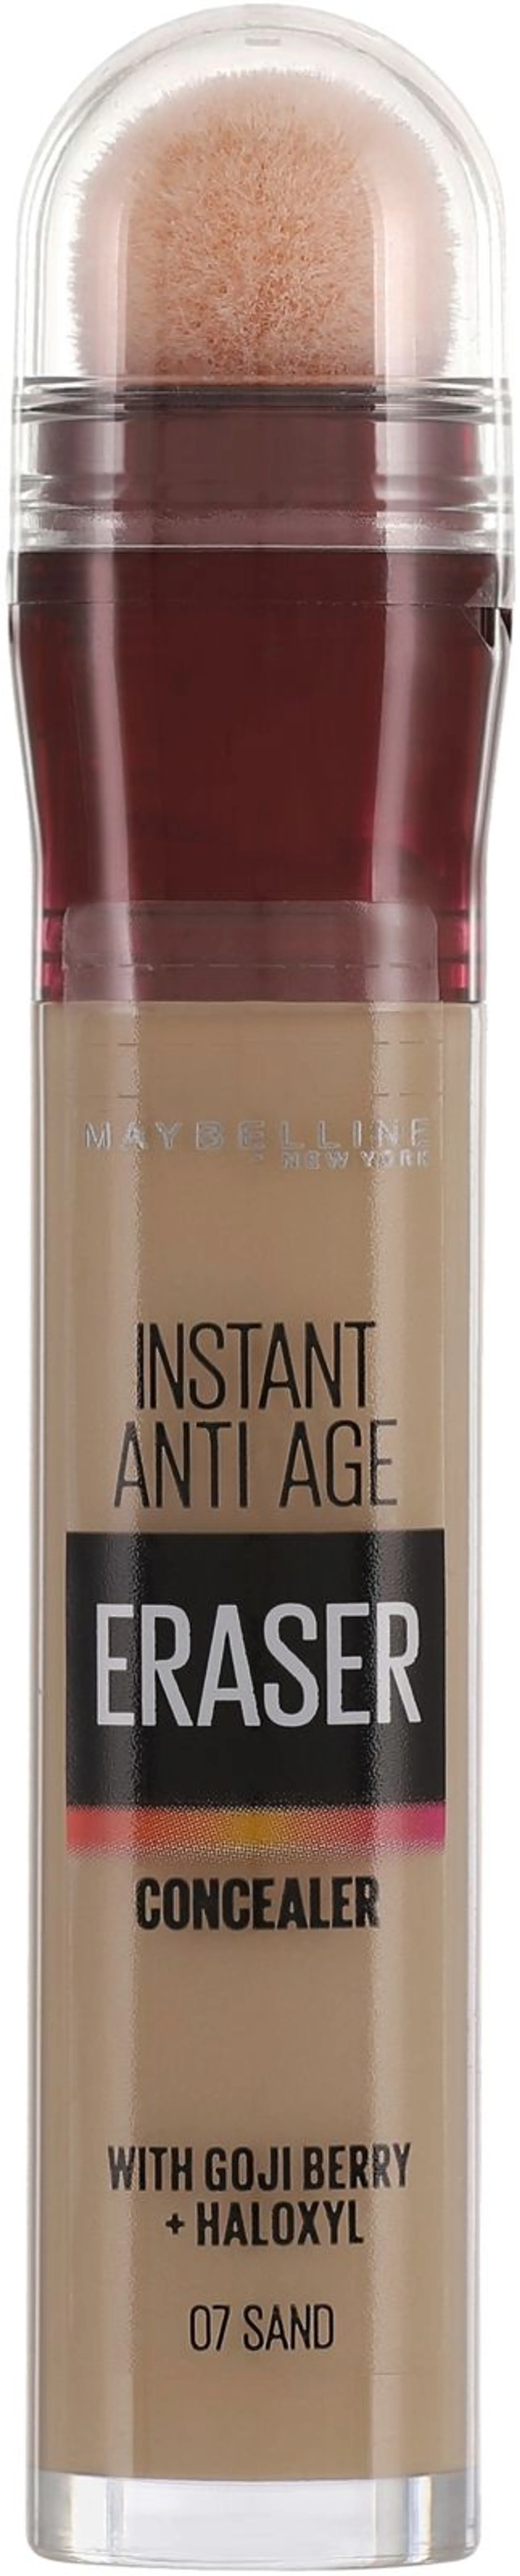 Maybelline New York Instant Anti Age Eraser 07 Sand peitevoide 6,8ml